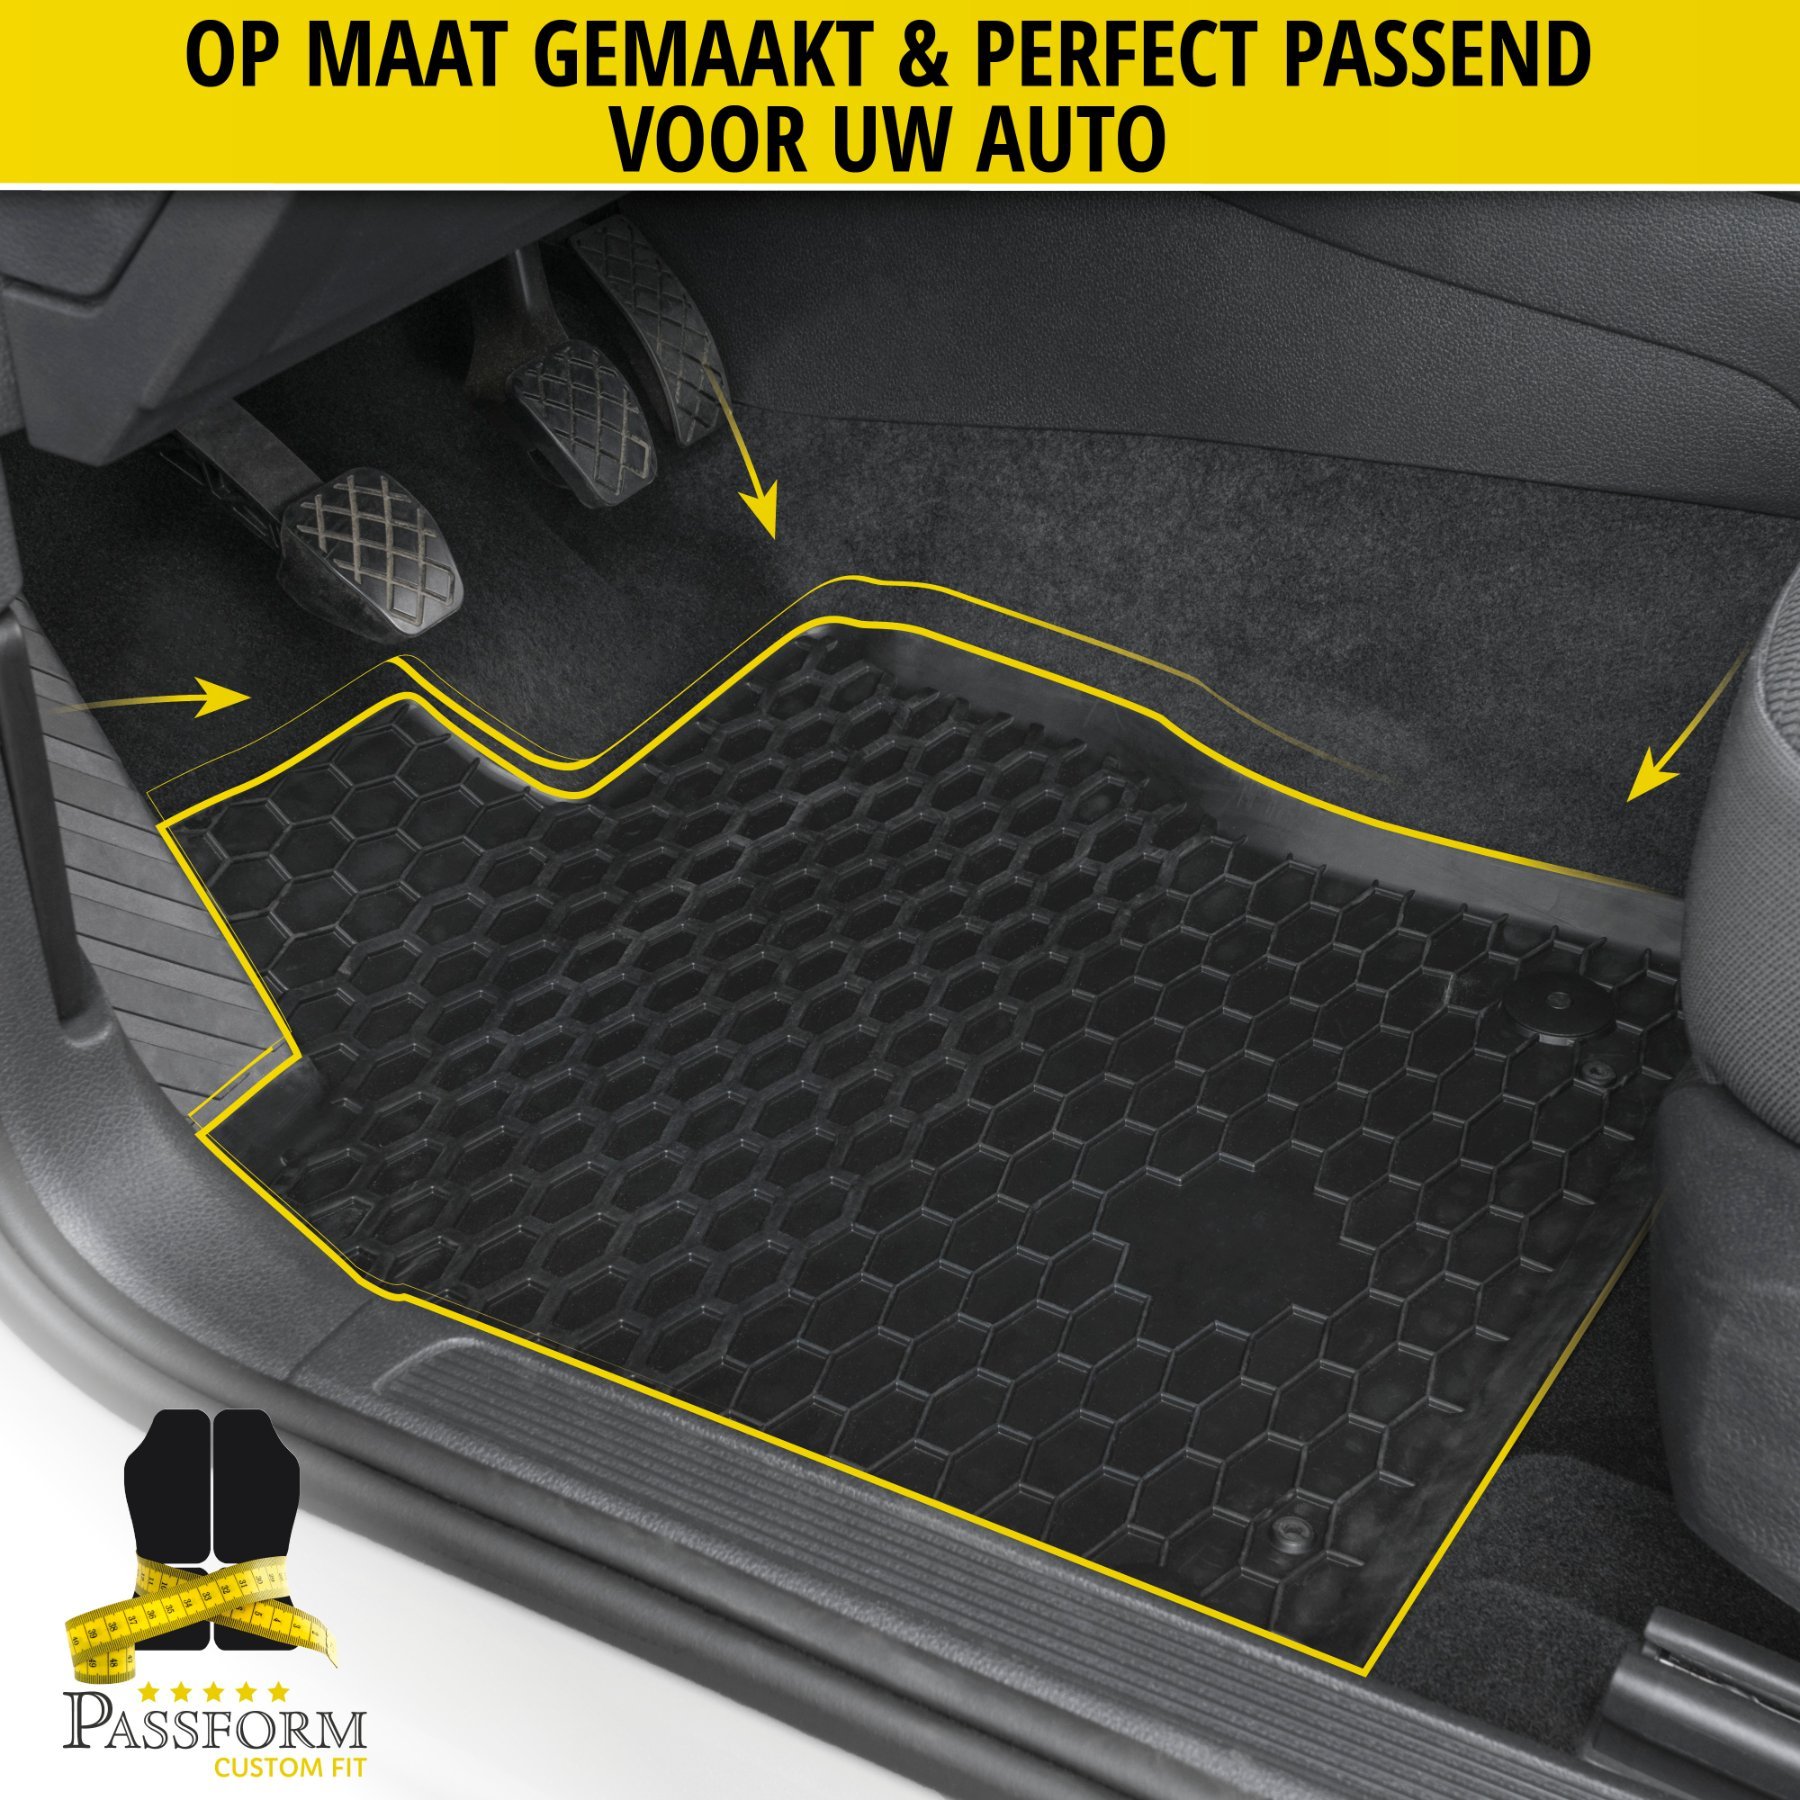 DirtGuard rubberen voetmatten geschikt voor Opel Insignia A (G09) 07/2008-2013